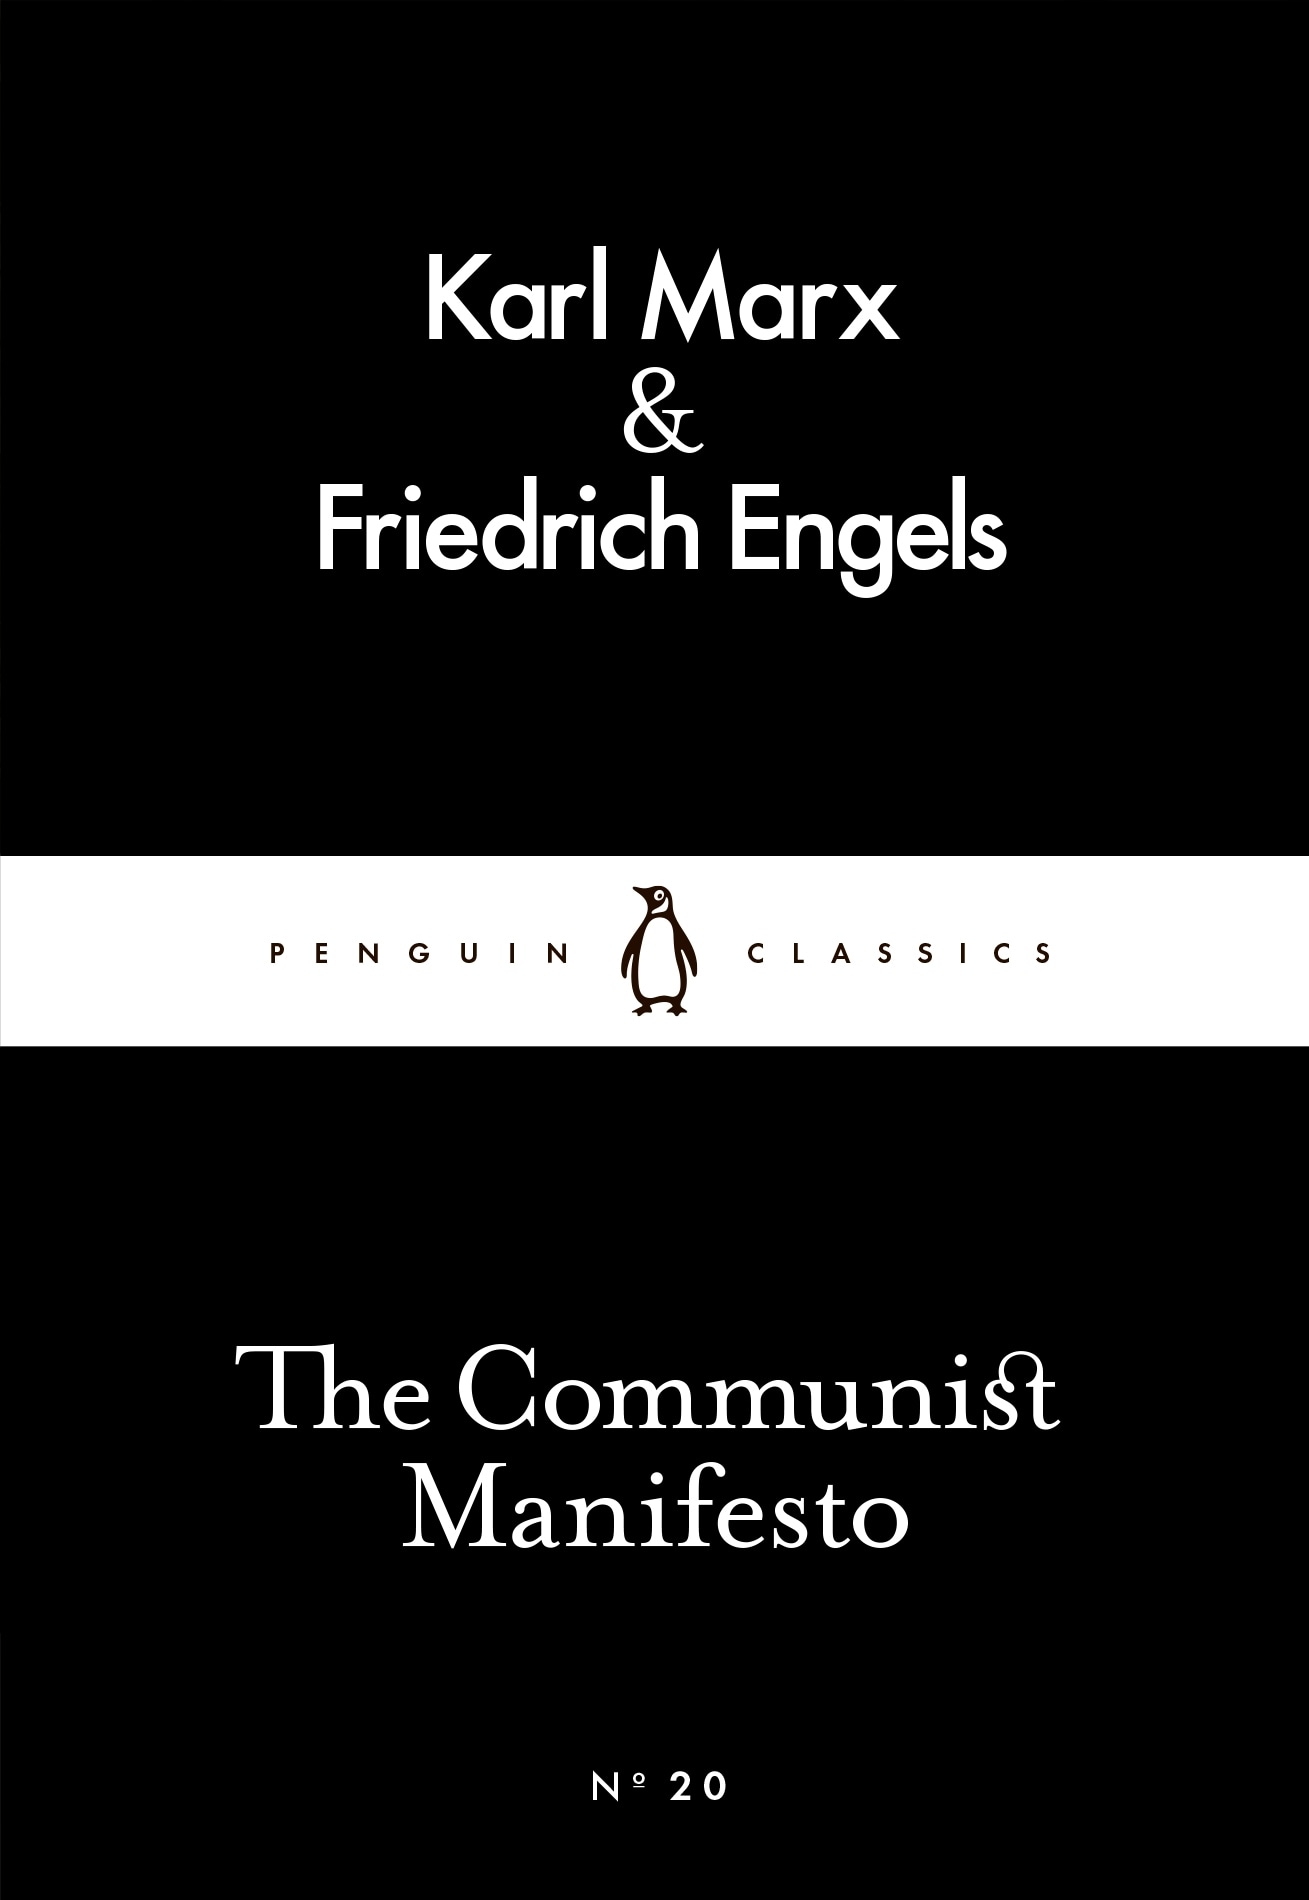 Book “The Communist Manifesto” by Karl Marx, Friedrich Engels — February 26, 2015